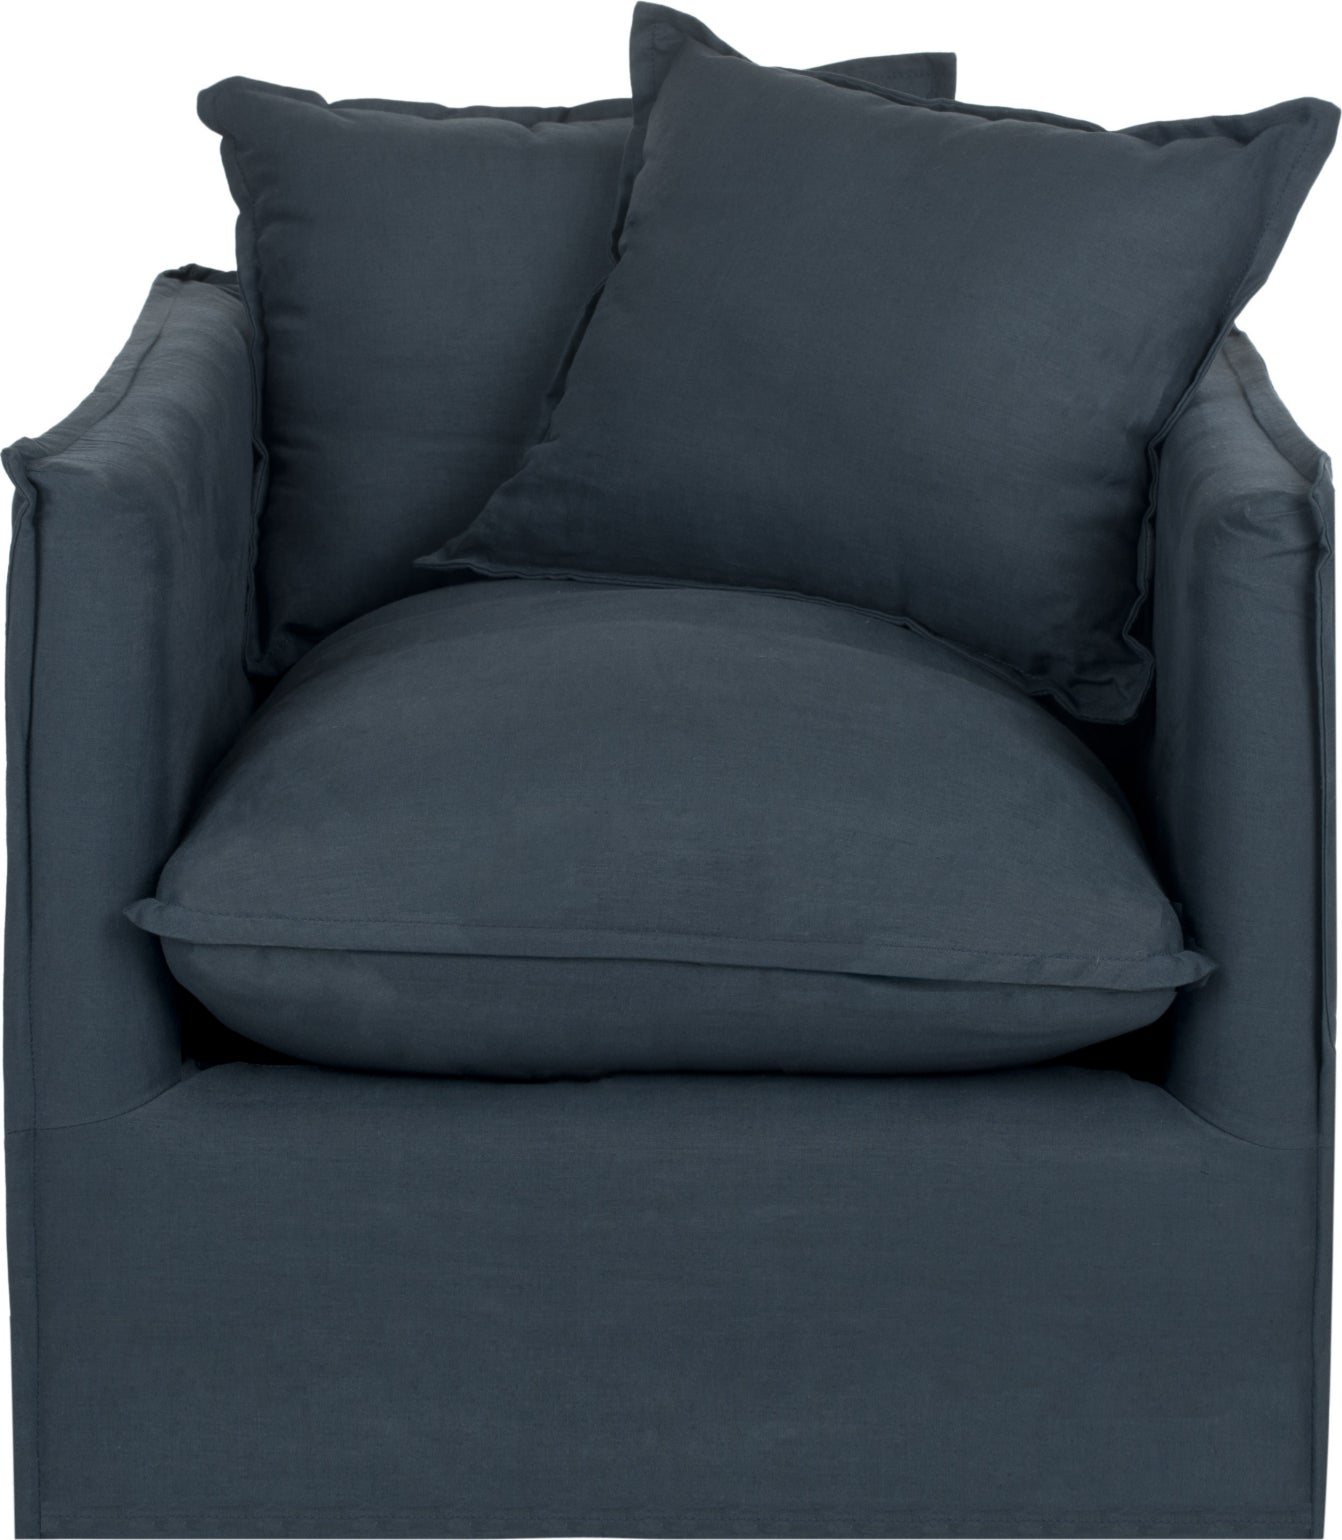 Safavieh Joey Arm Chair Blue and Black Furniture main image